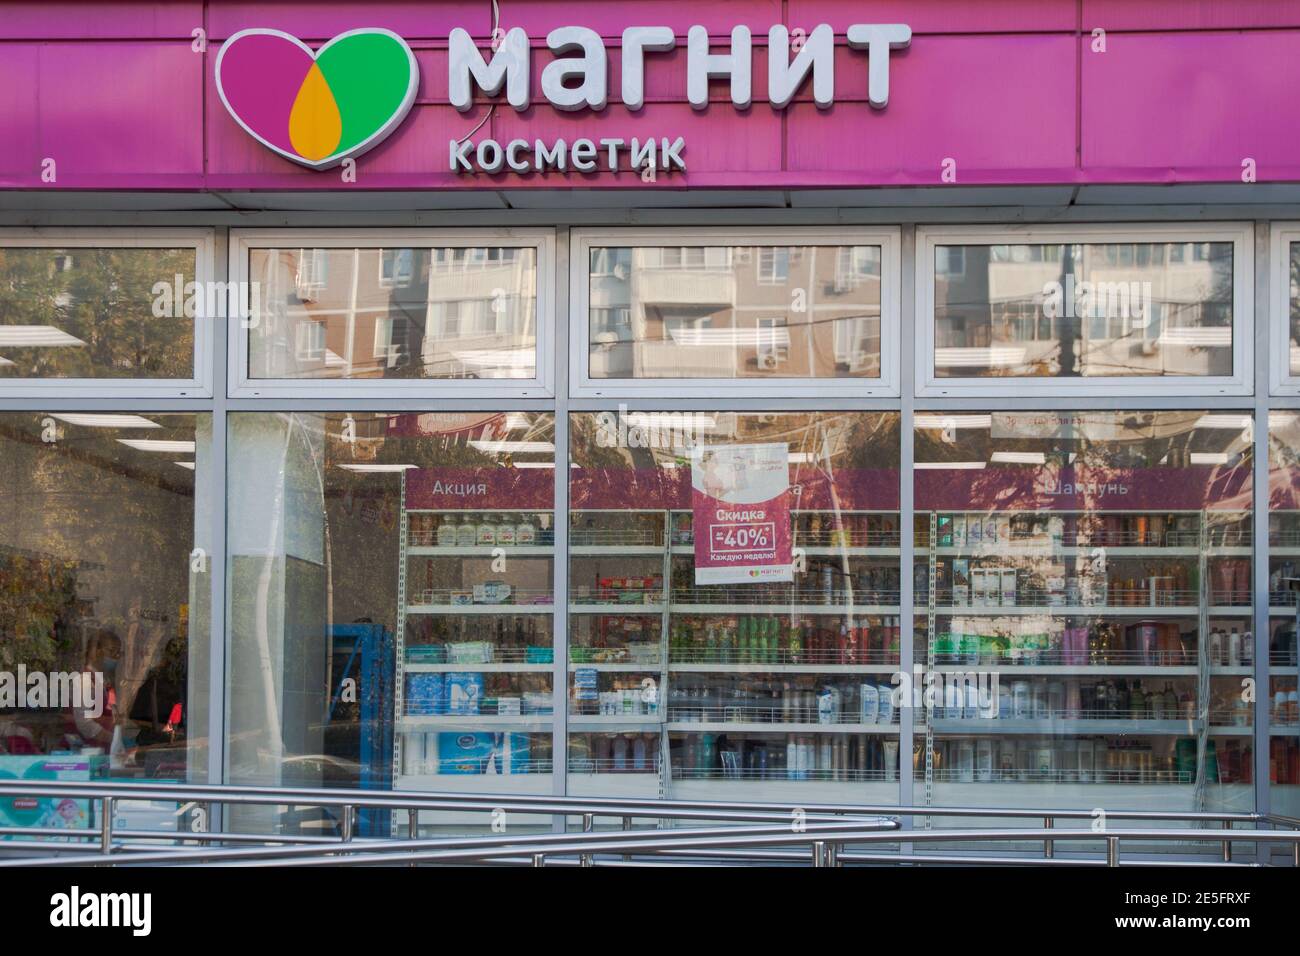 Krasnodar, Krasnodar Krai, Russia, November 5, 2020: Magnit - leading food retail chain in Russian. Magnit cosmetics storefront Stock Photo